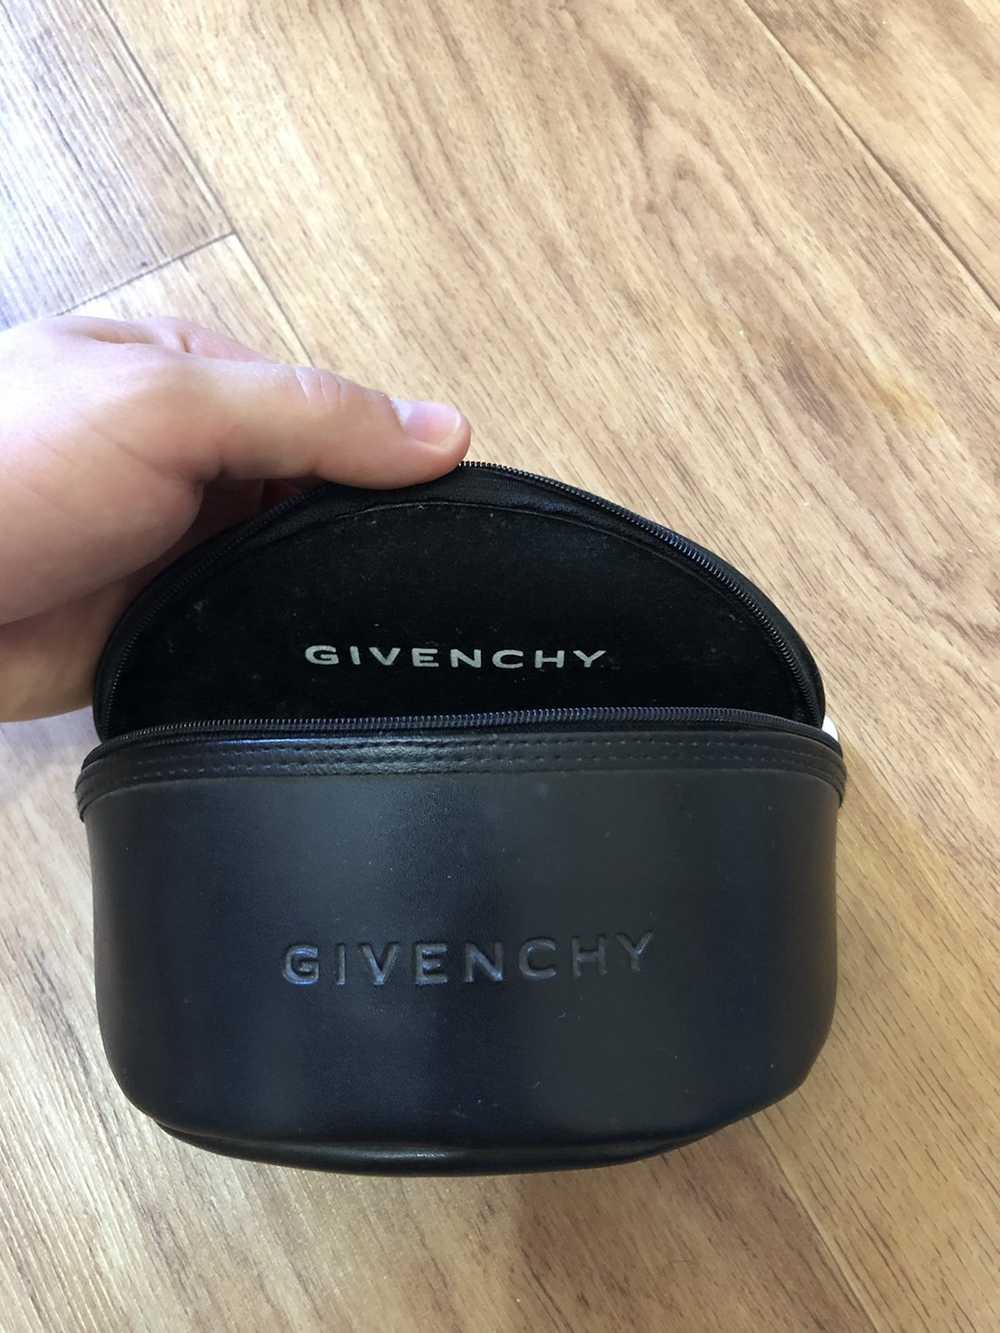 Givenchy Givenchy sunglasses x Rare x Vintage - image 7